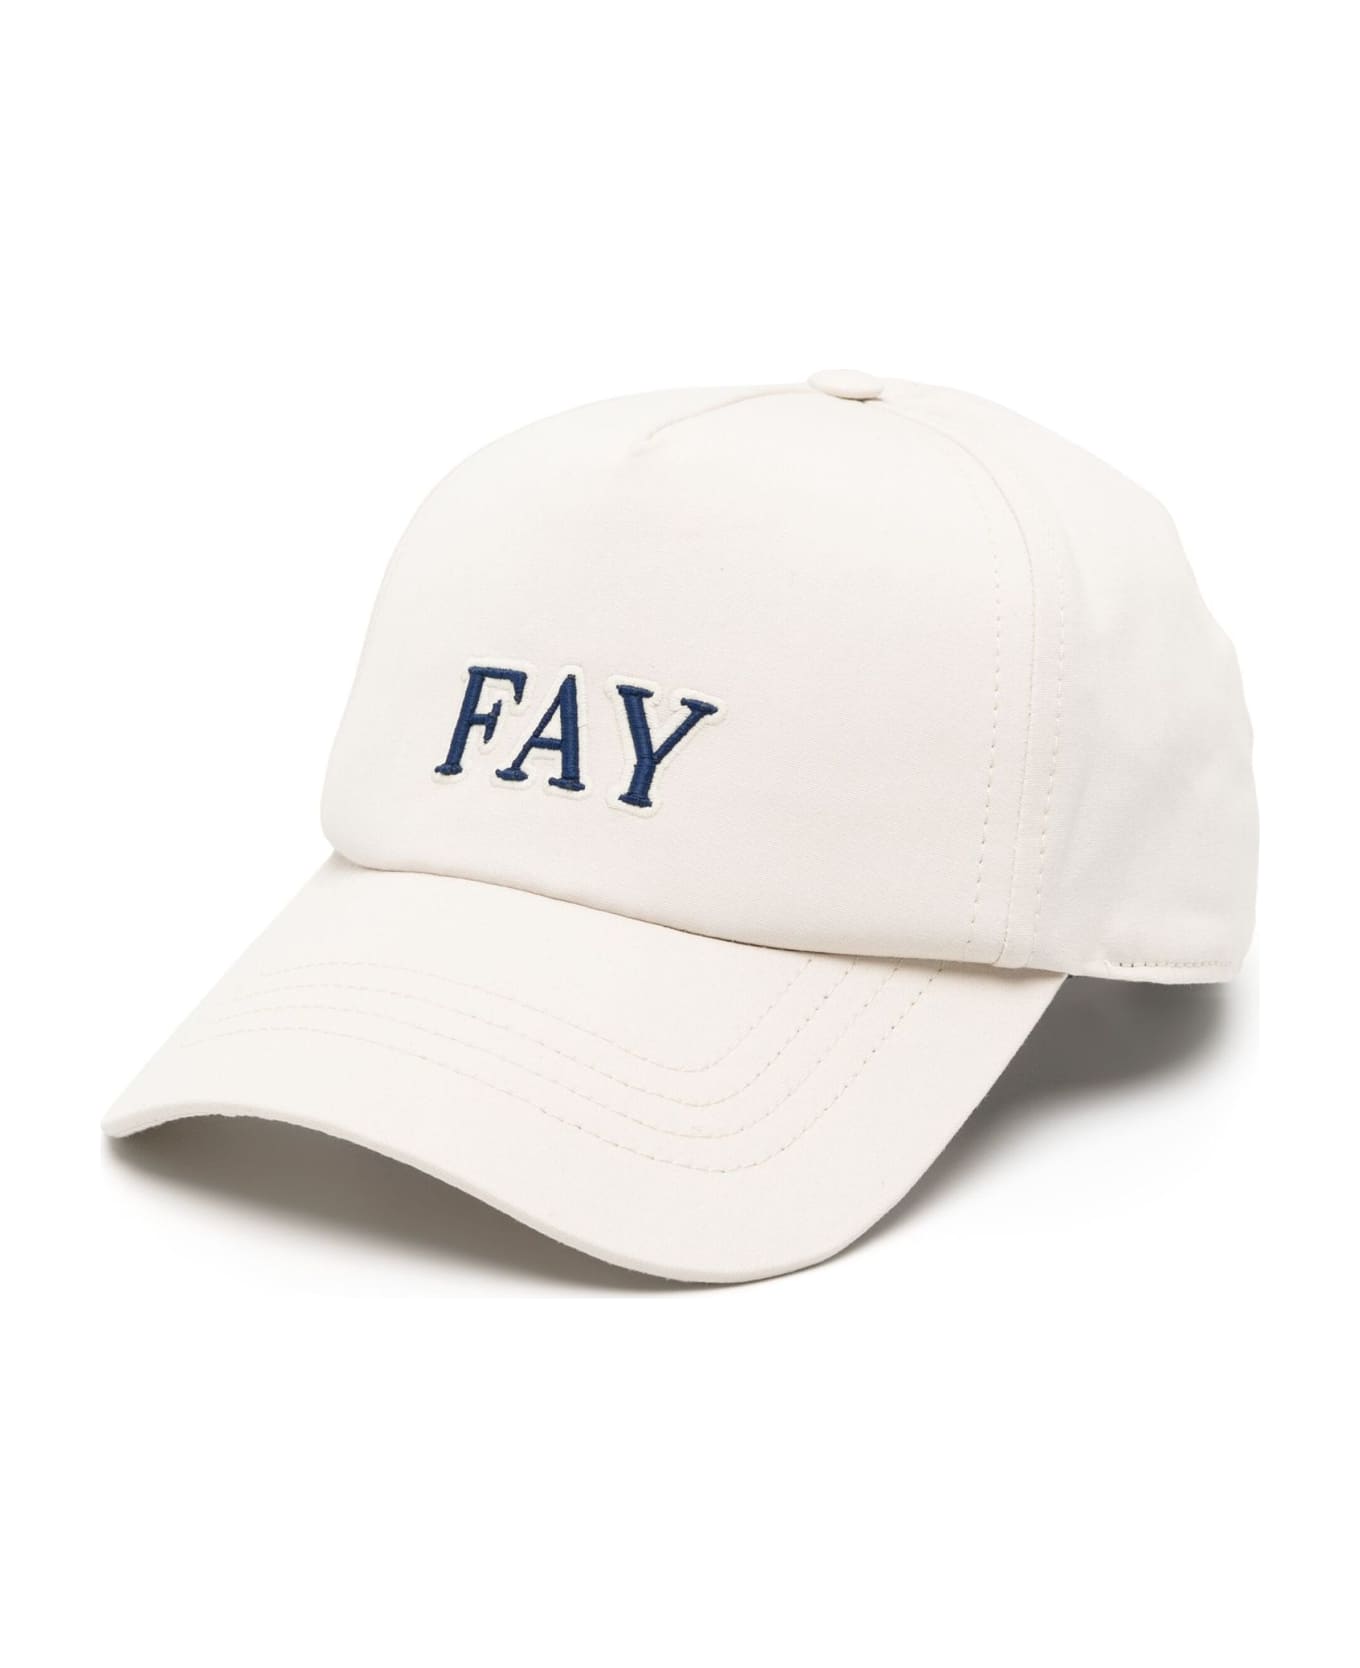 Fay Light Beige Cotton Baseball Cap - Beige